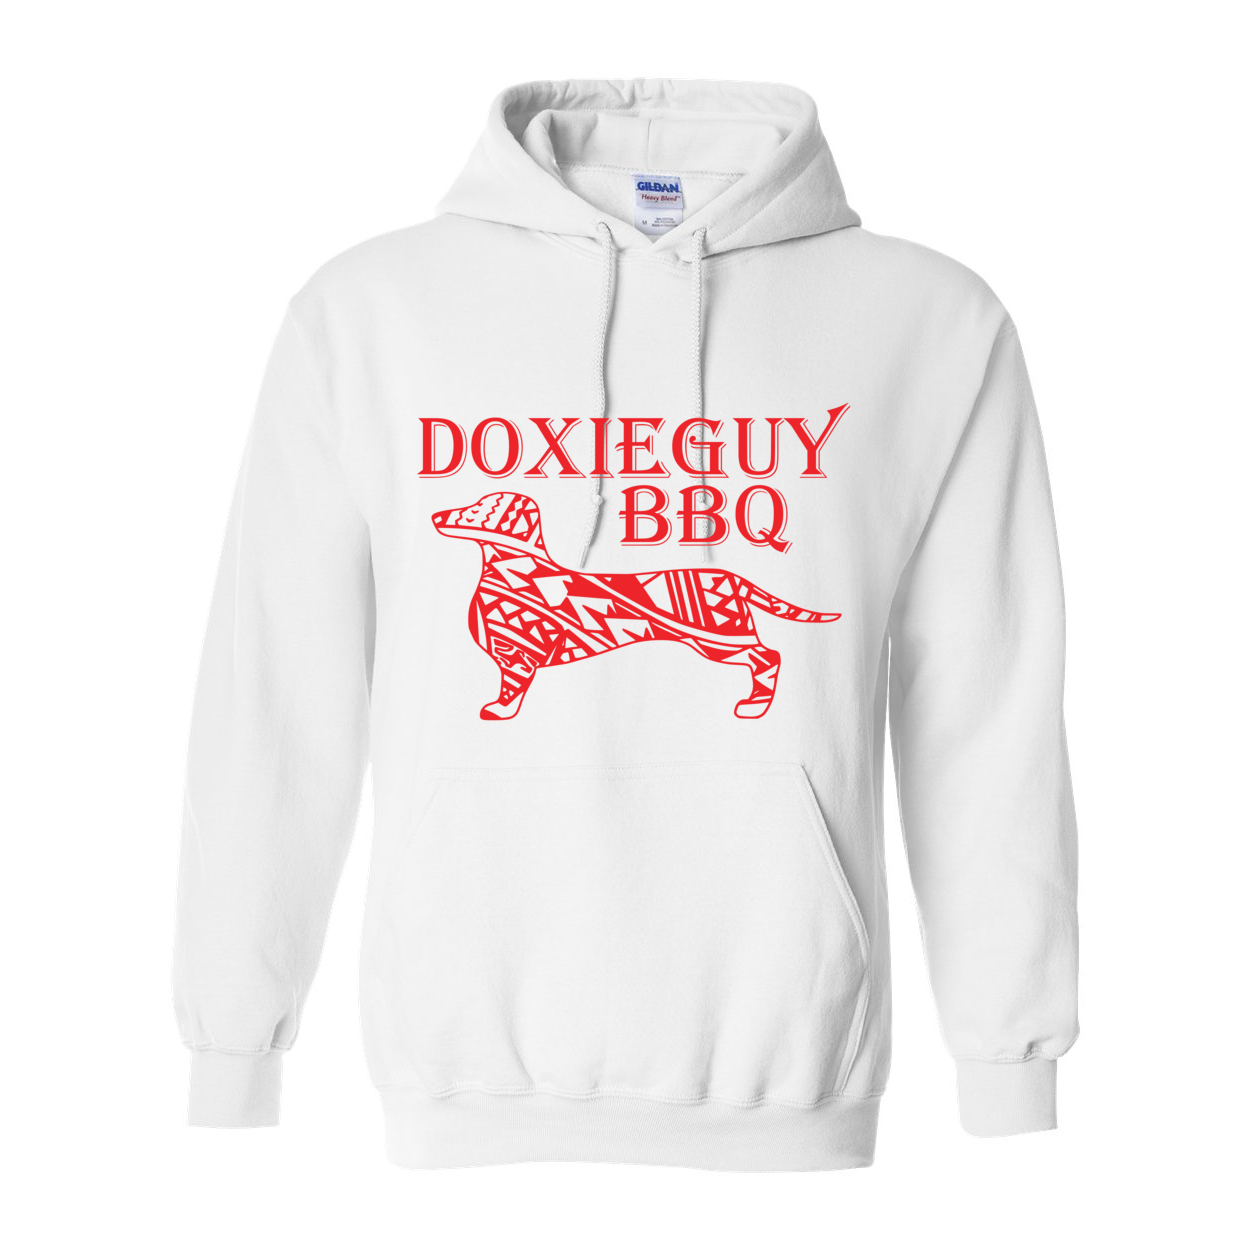 DoxieGuy BBQ - Heavy Blend Hooded Sweatshirt